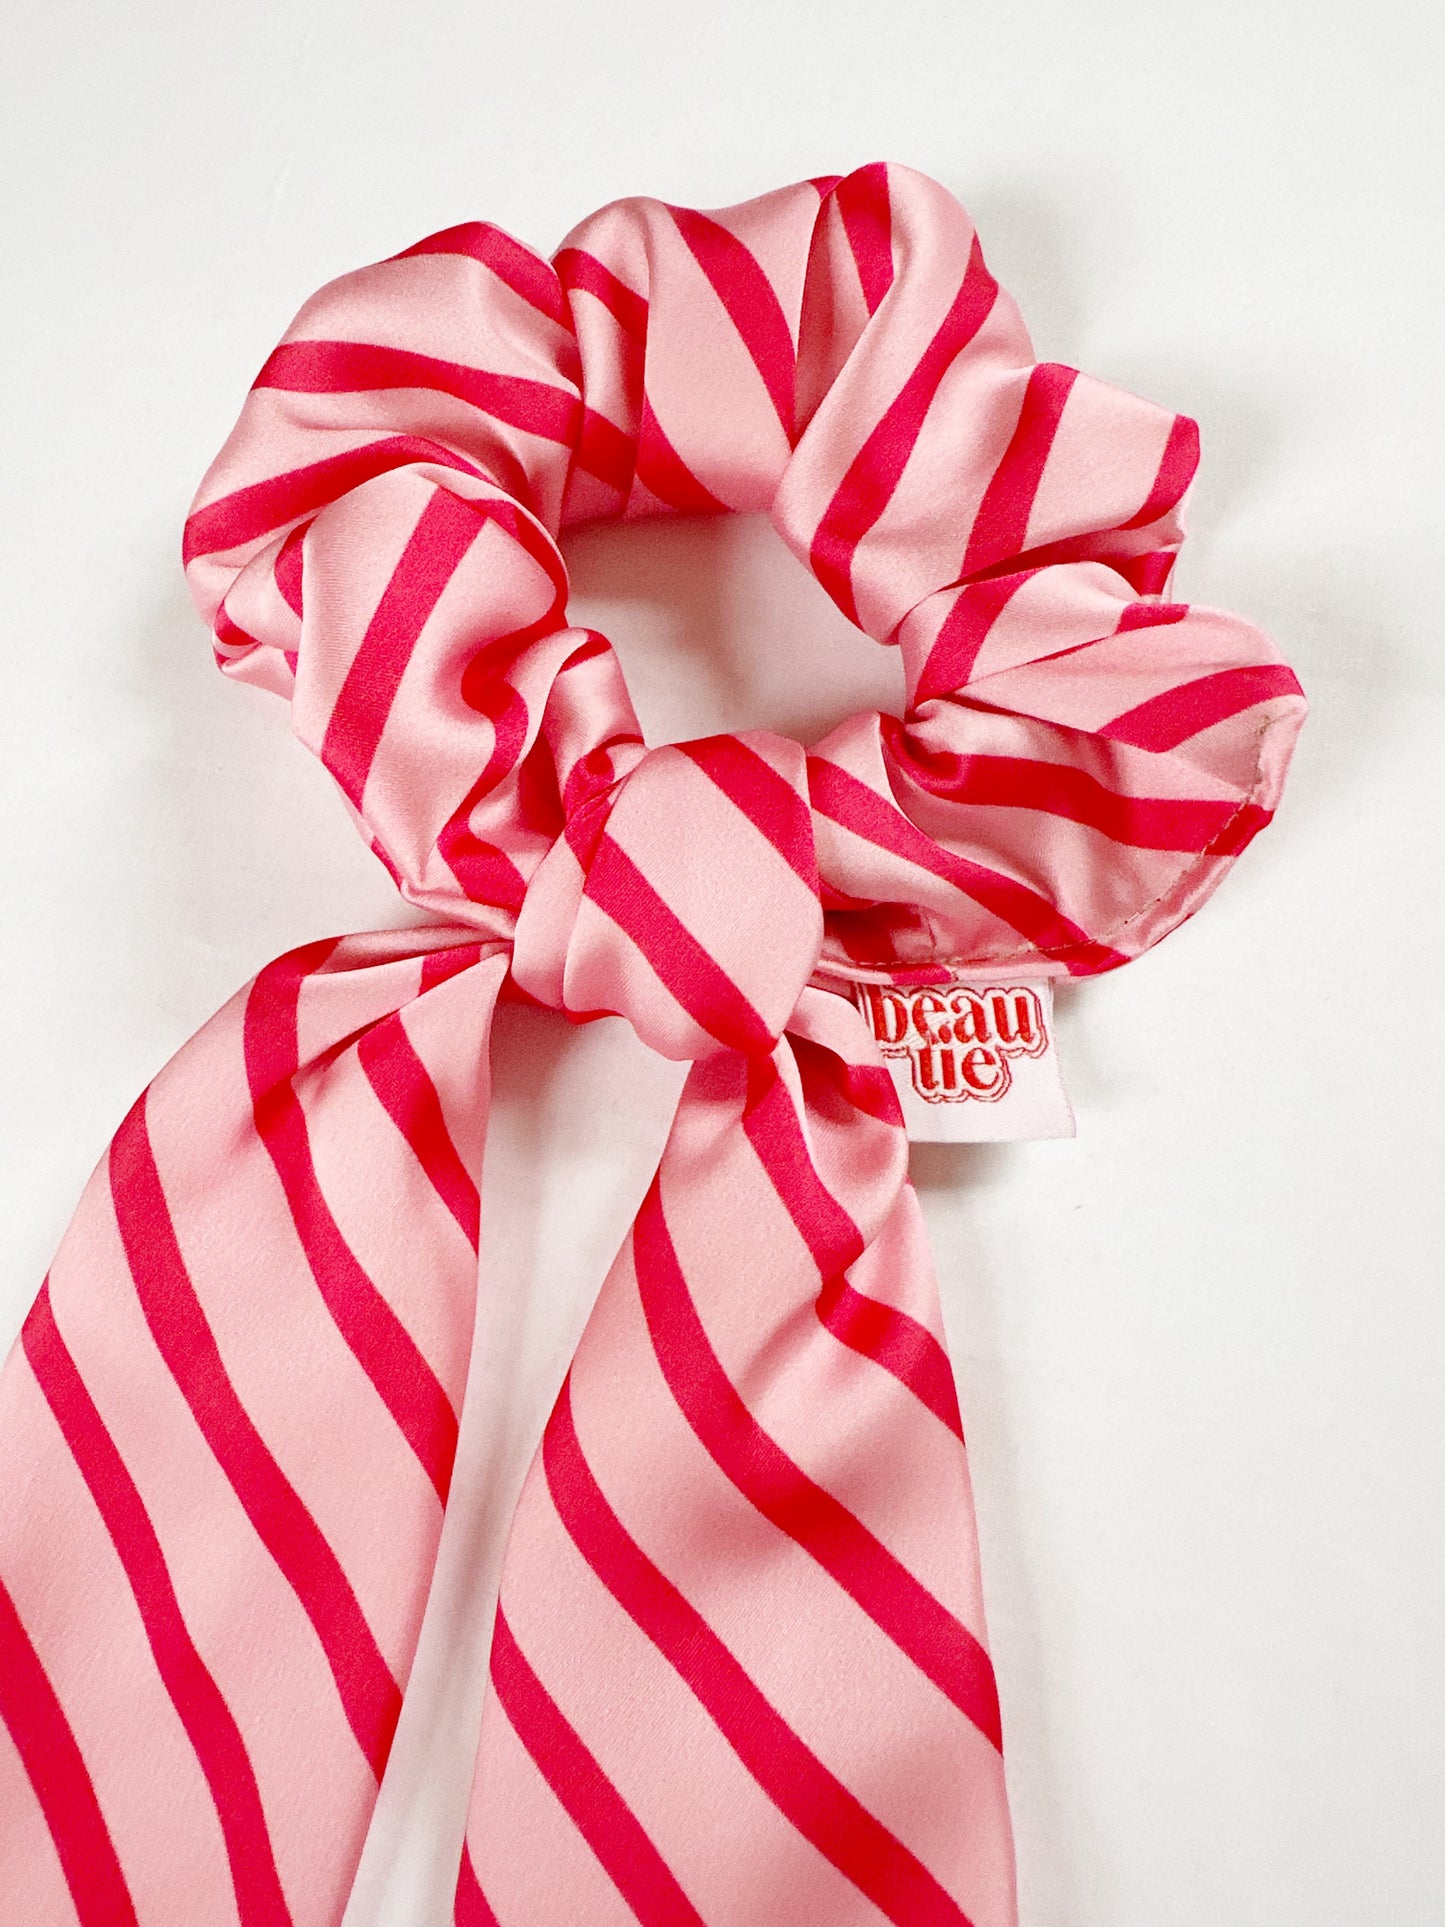 Dolly scarf scrunchie in red pink stripe silky